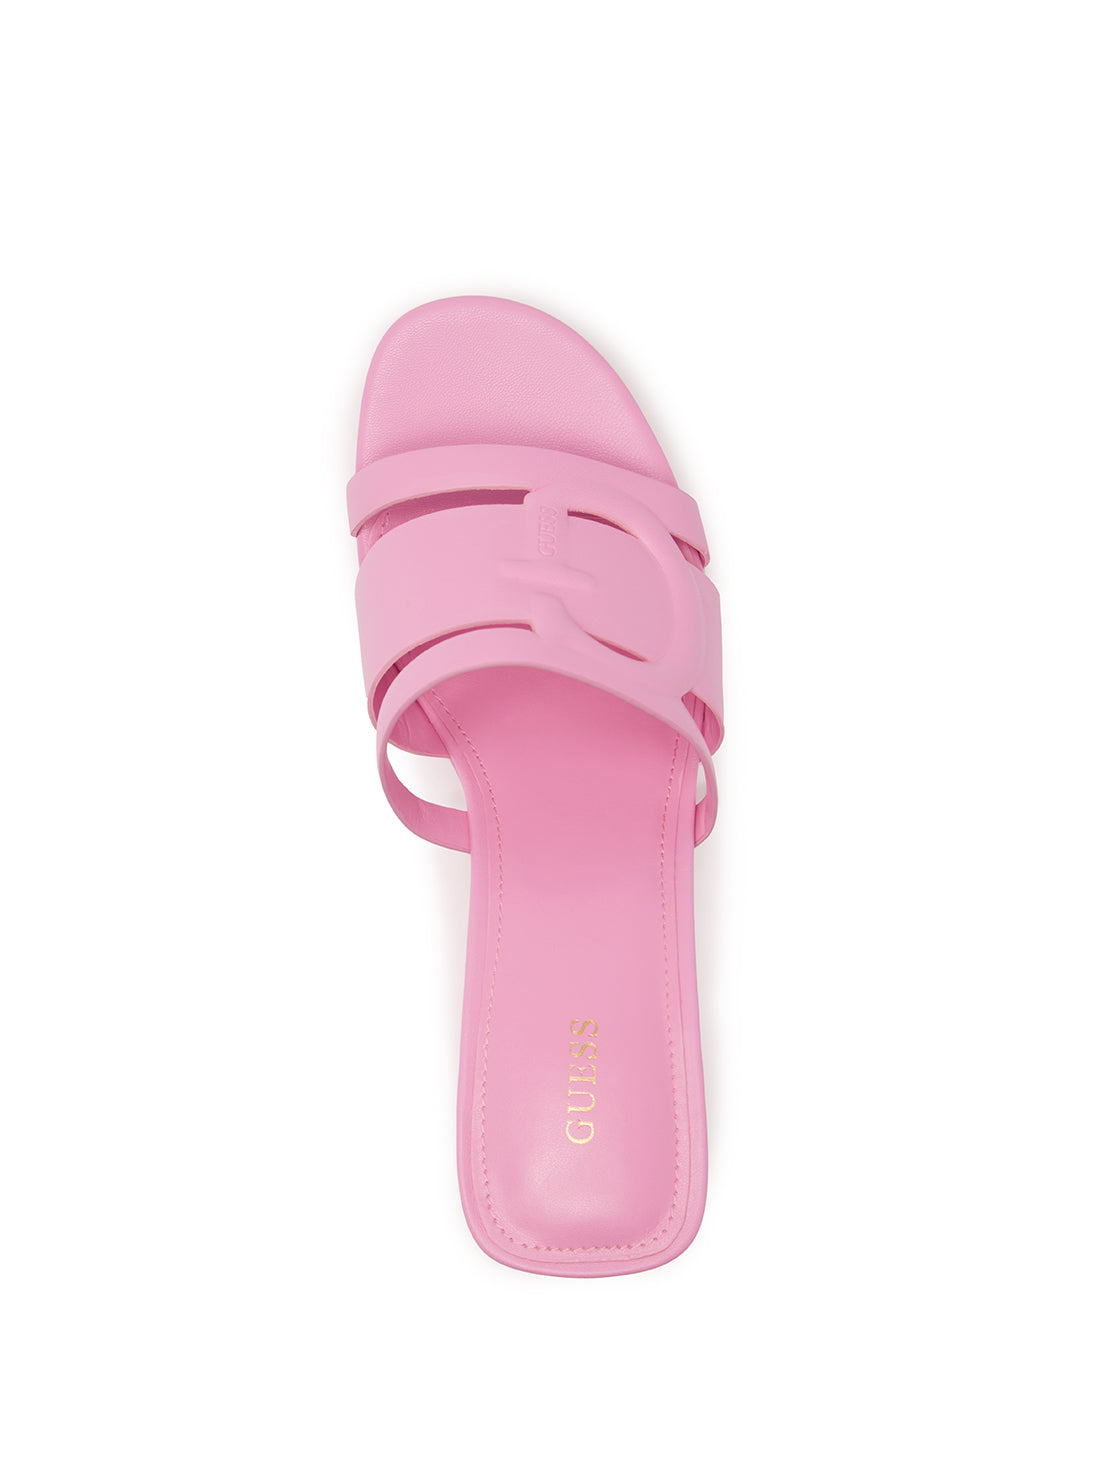 GUESS Women's Pink Nads Logo Sandal Heels NADS Top View